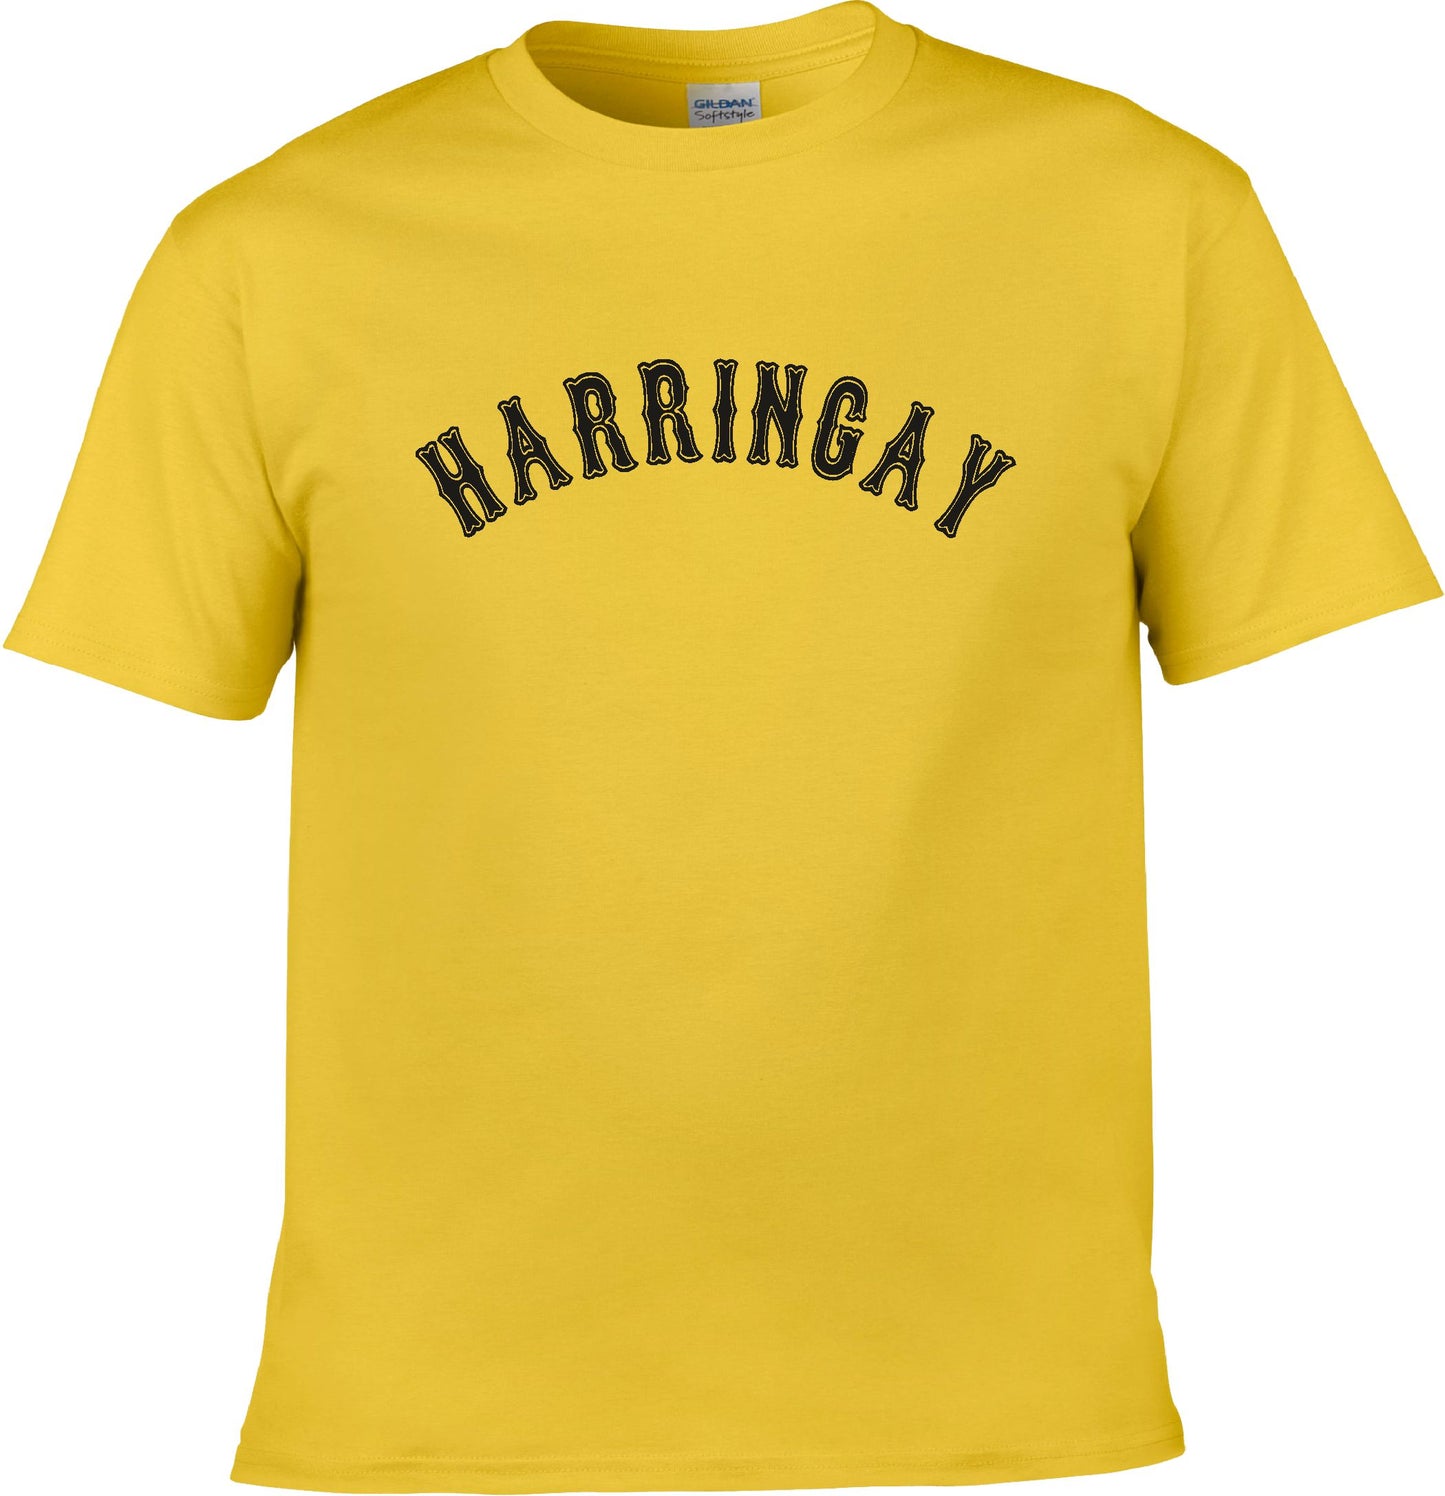 Harringay T-Shirt - London Souvenir, Custom Print Available, Various Colours